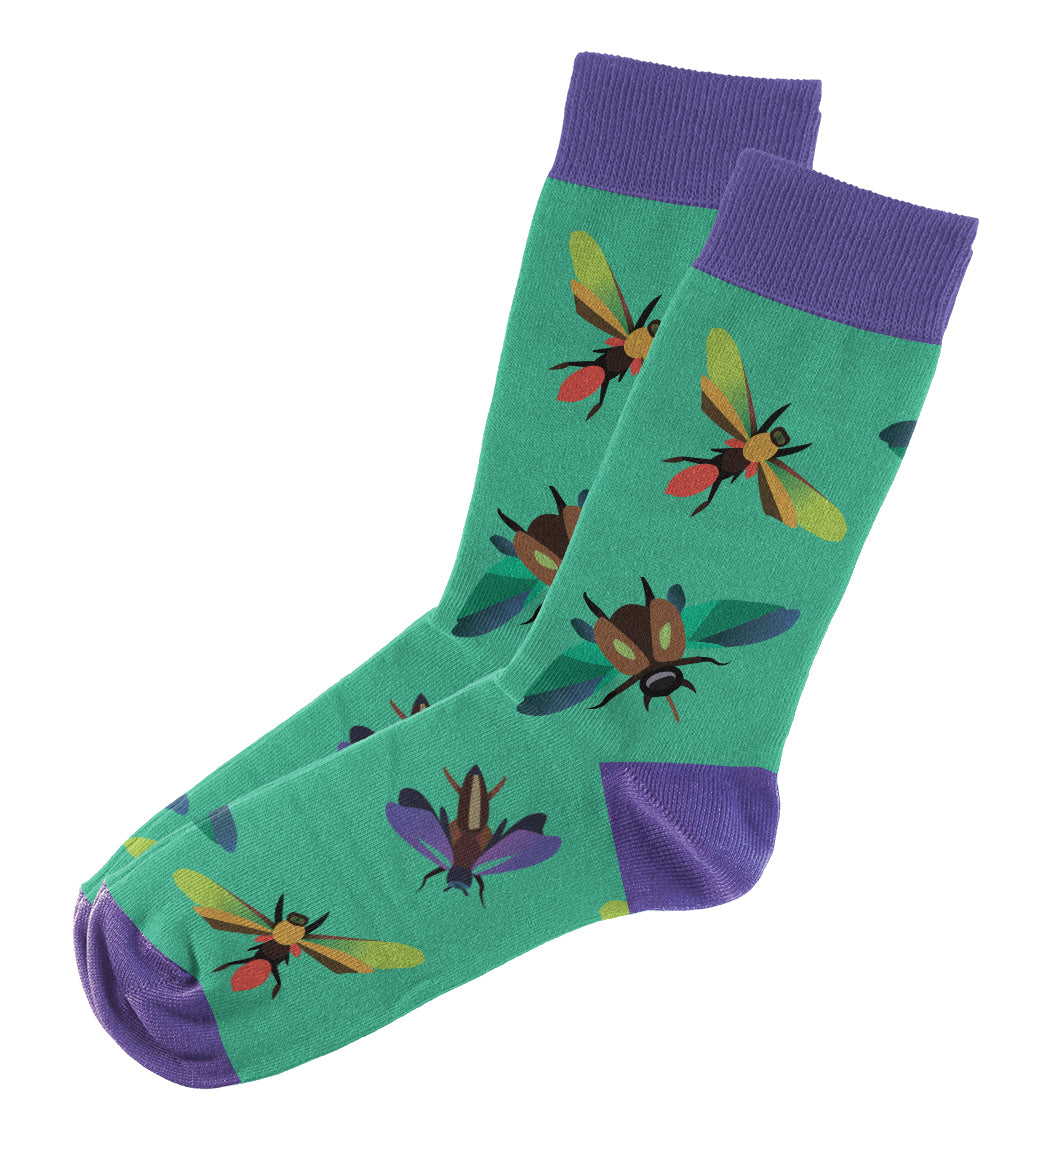 Mens Fatmingo Fly Socks | Multi-Color Fun Socks | Machine Wash Cotton Blend | Size US Mens 8-13